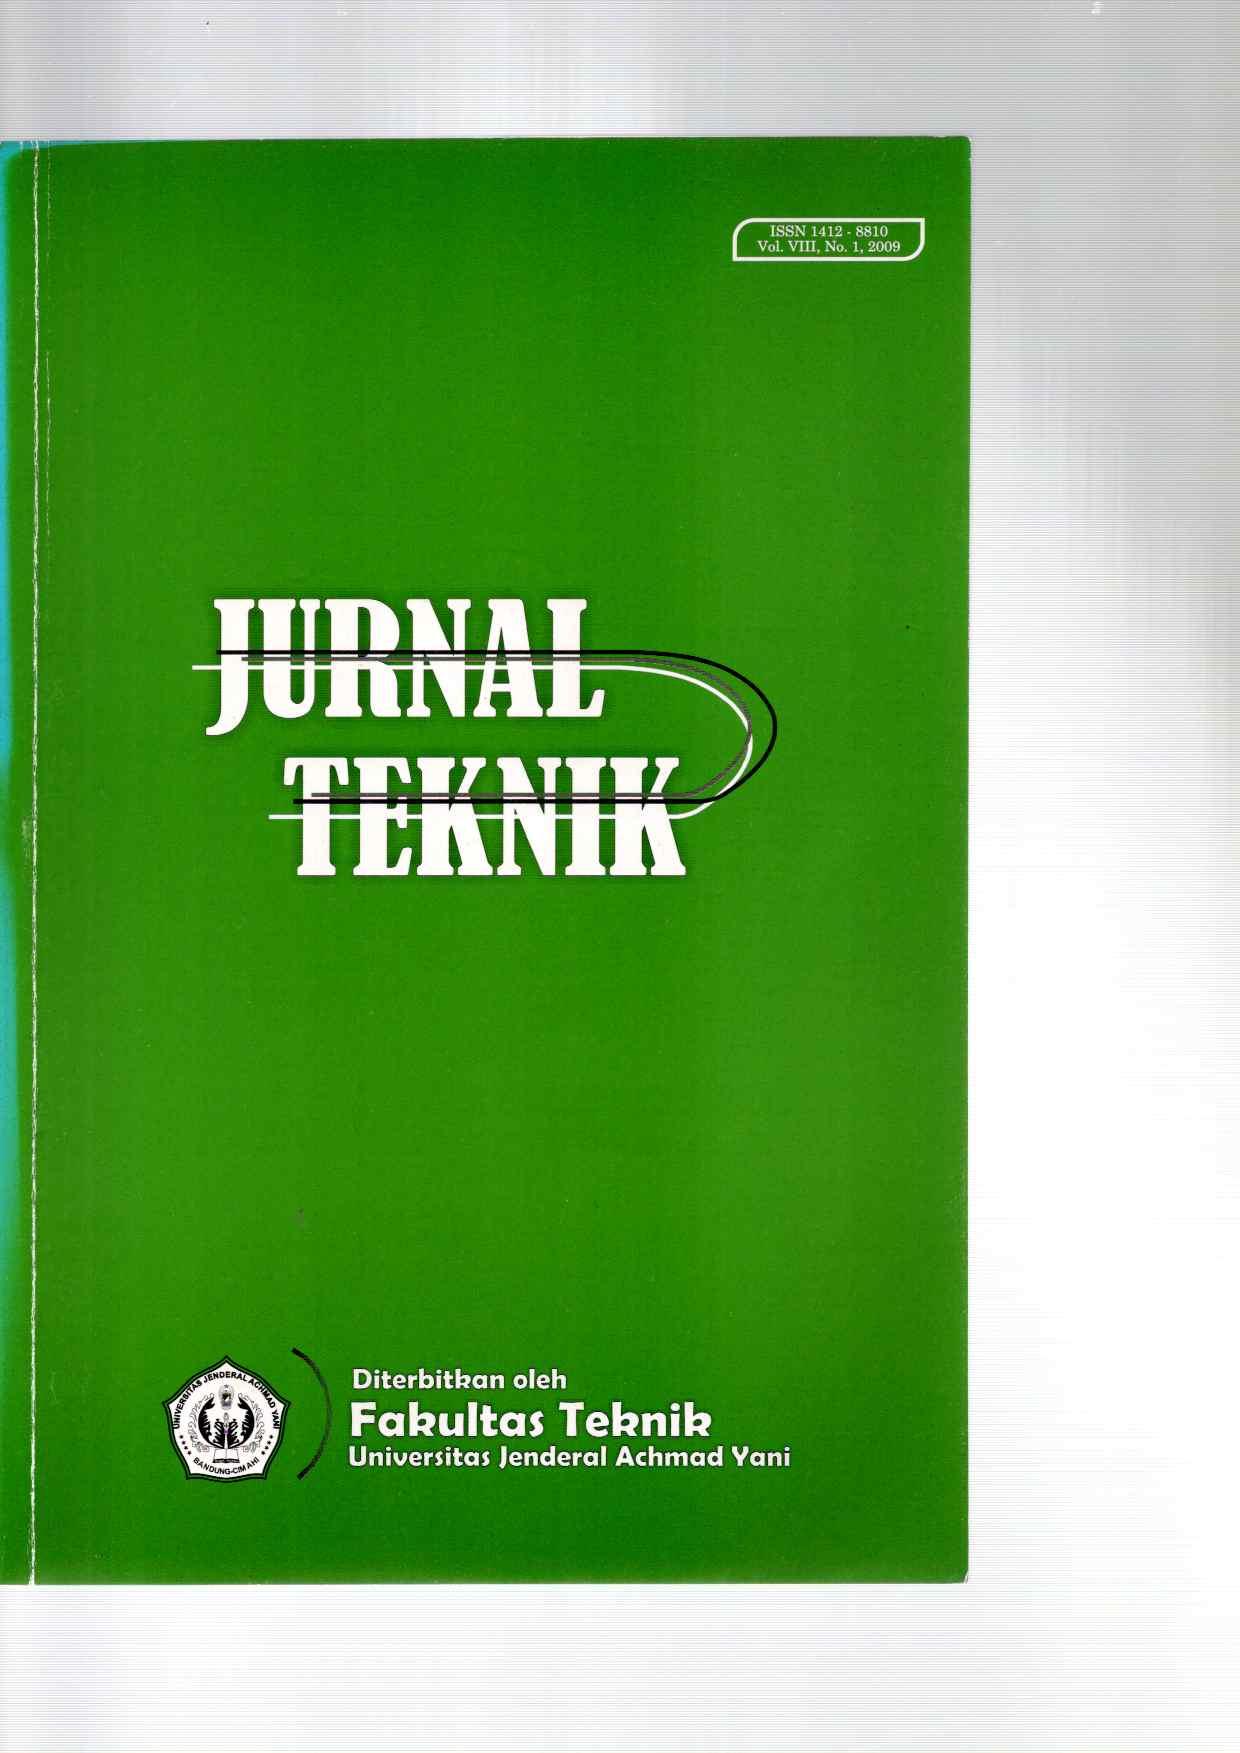 					View Vol. 8 No. 1 (2009): Jurnal Teknik - Media Pengembangan Ilmu dan Aplikasi Teknik
				